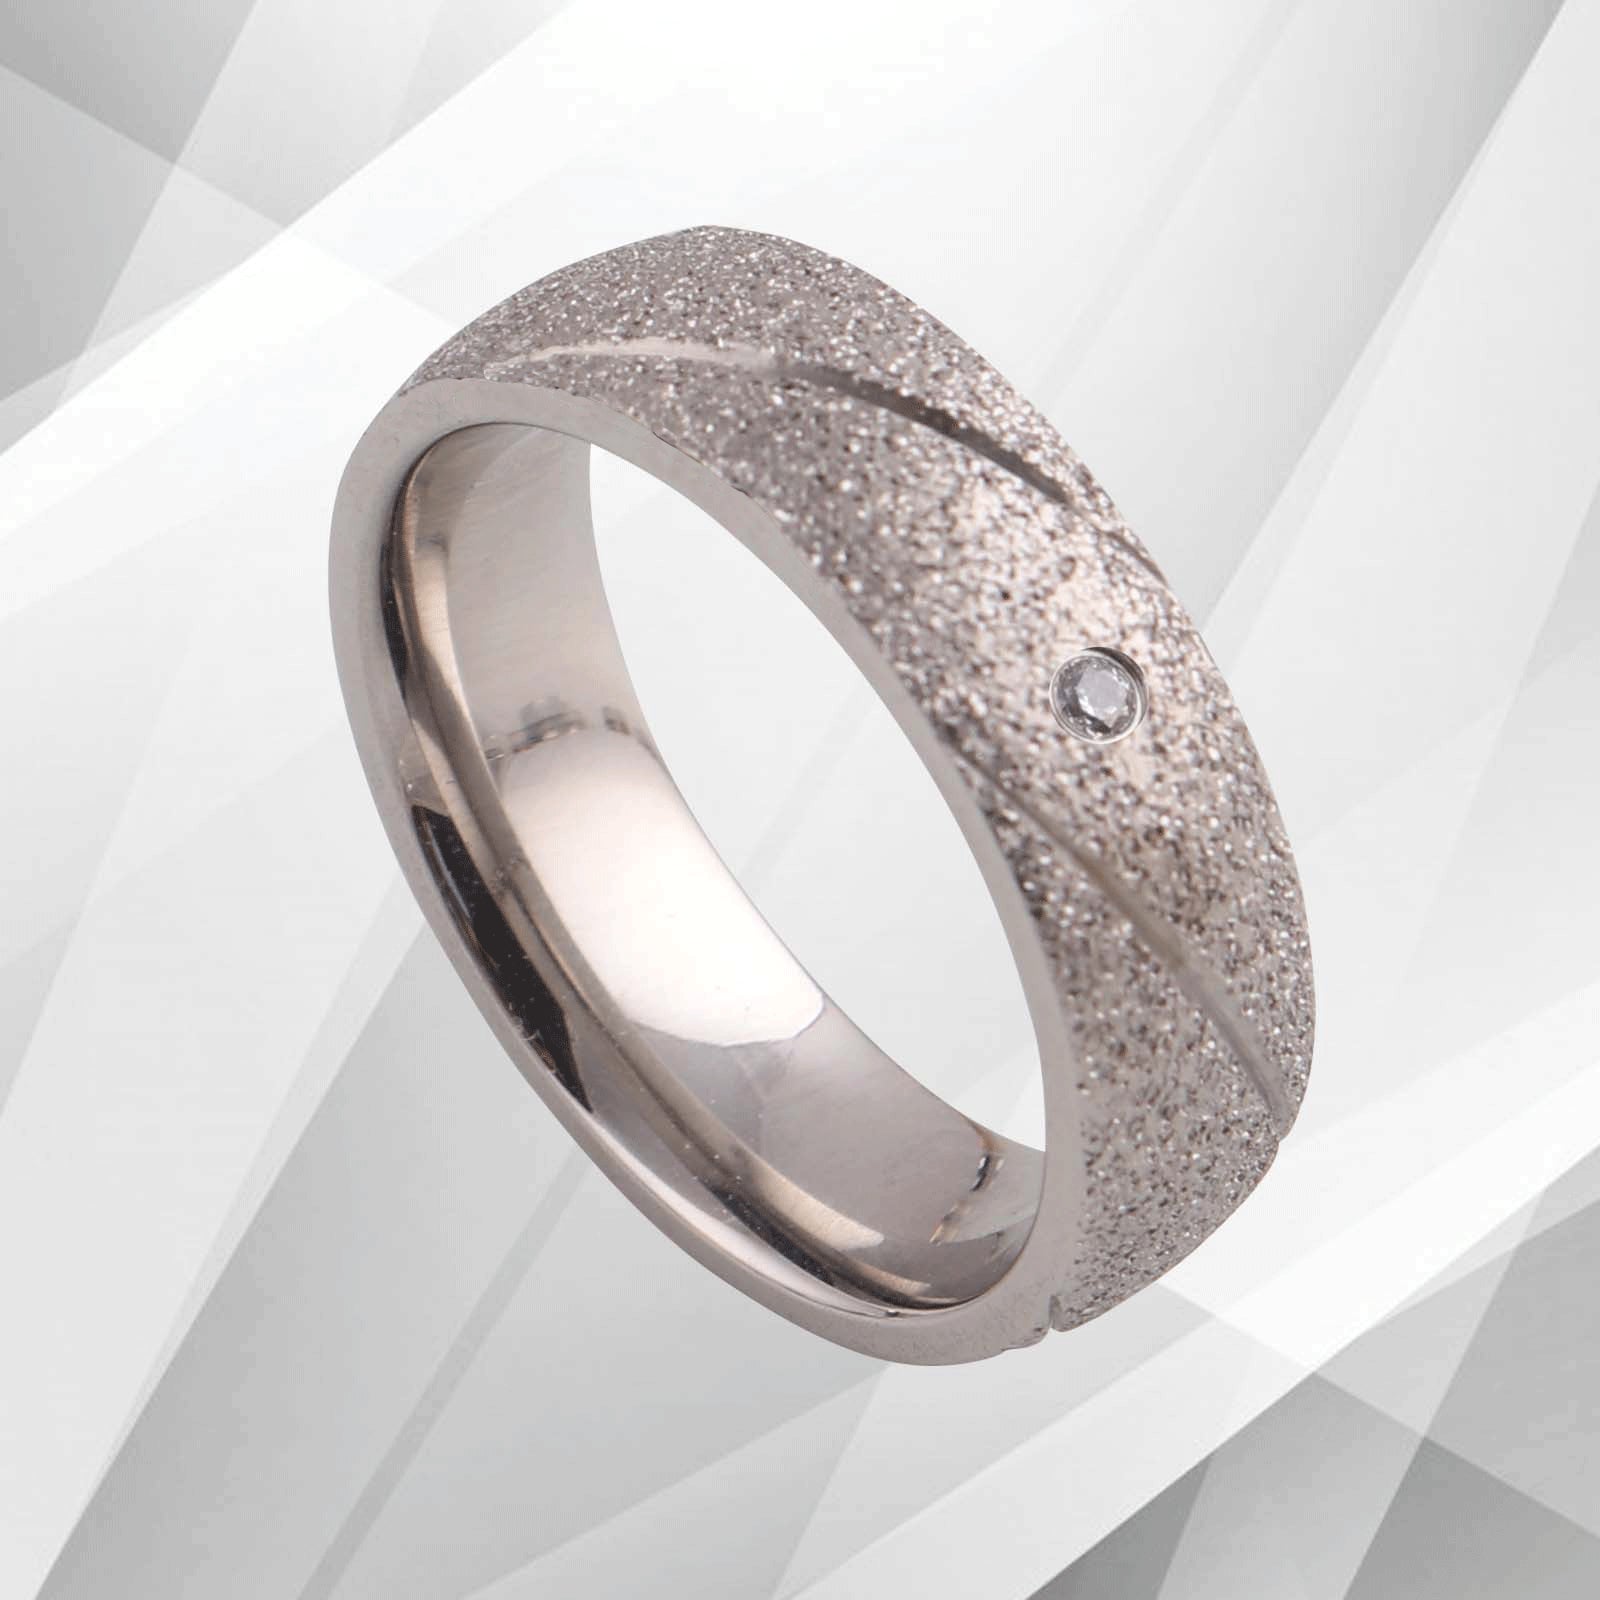 Glowing Designer Titanium CZ Diamond Ring - 6mm Wide, 18Ct White Gold Finish, Comfort Fit - Engagement, Wedding, Anniversary Gift Band - Women's, Handmade, NDFJ15A Bijou Her